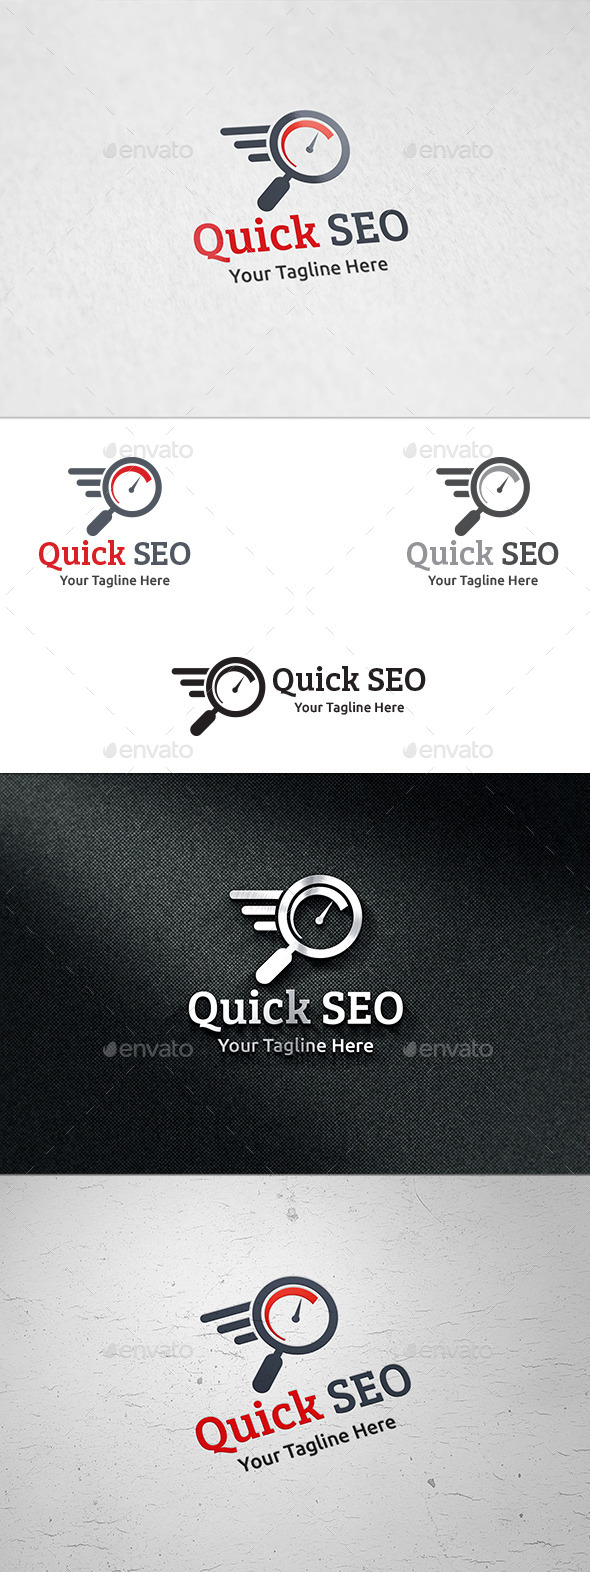 Quick SEO - Logo Template